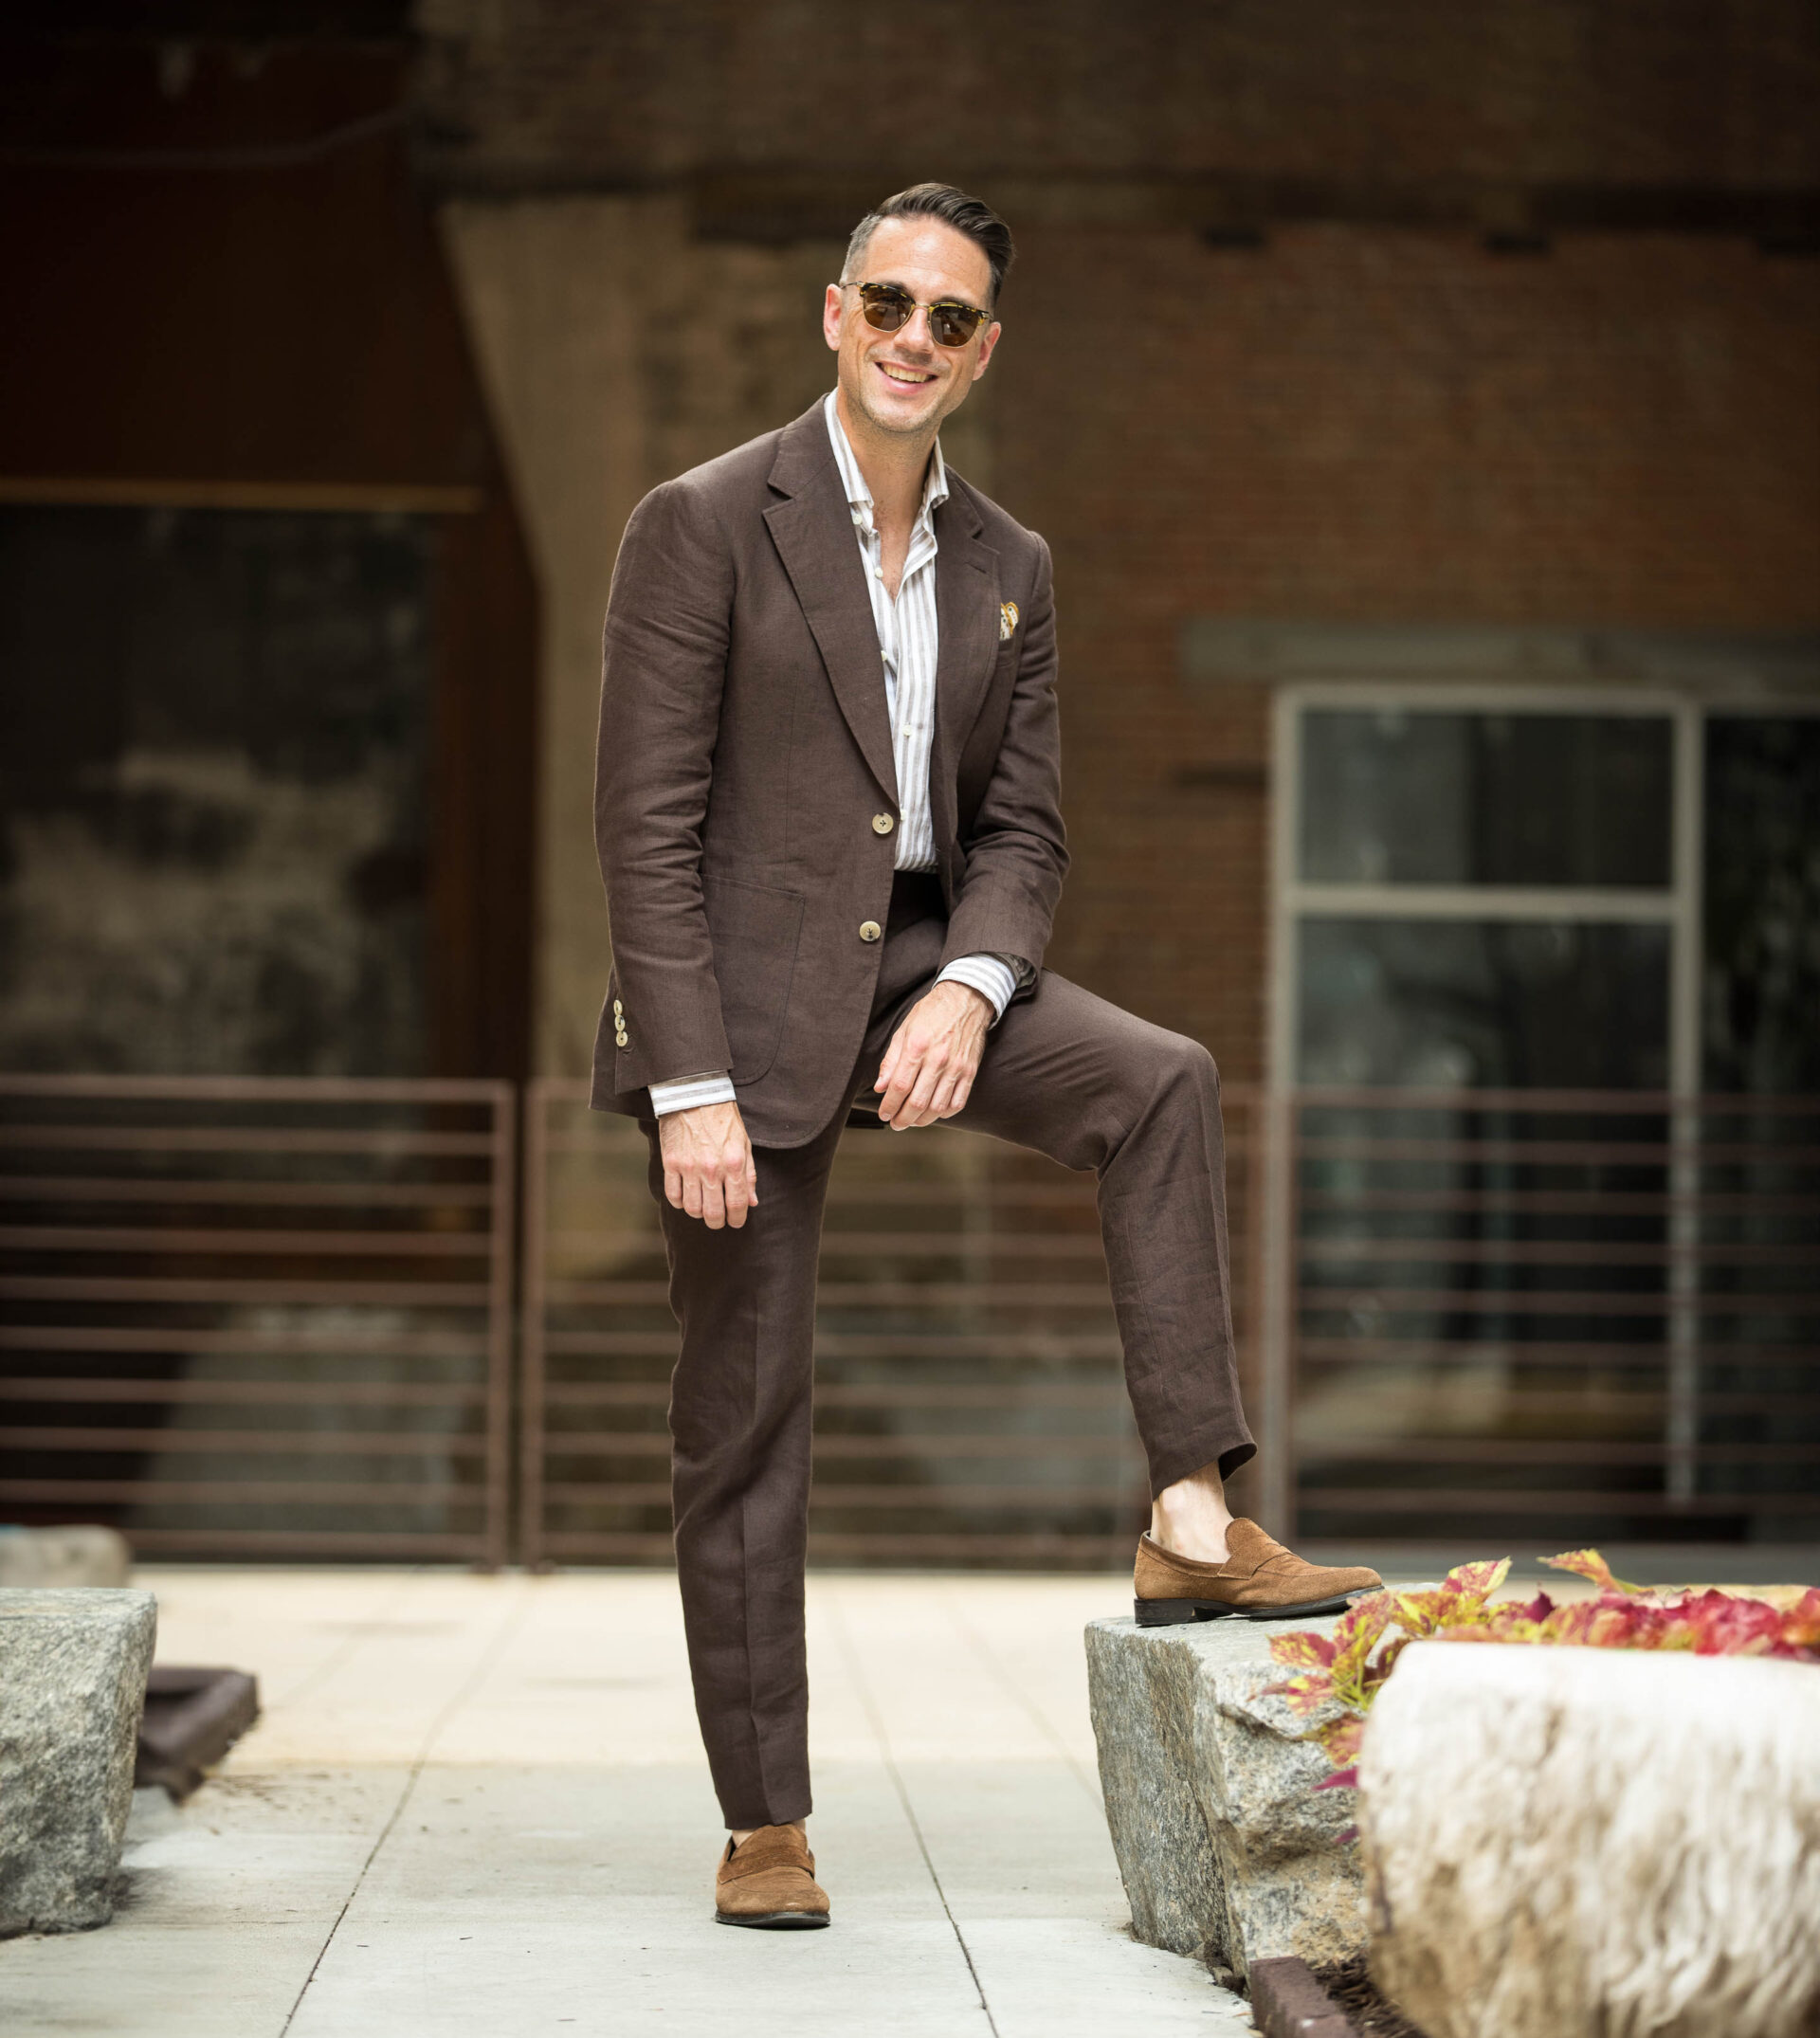 Men's Summer and Linen Suits, Explore our New Arrivals